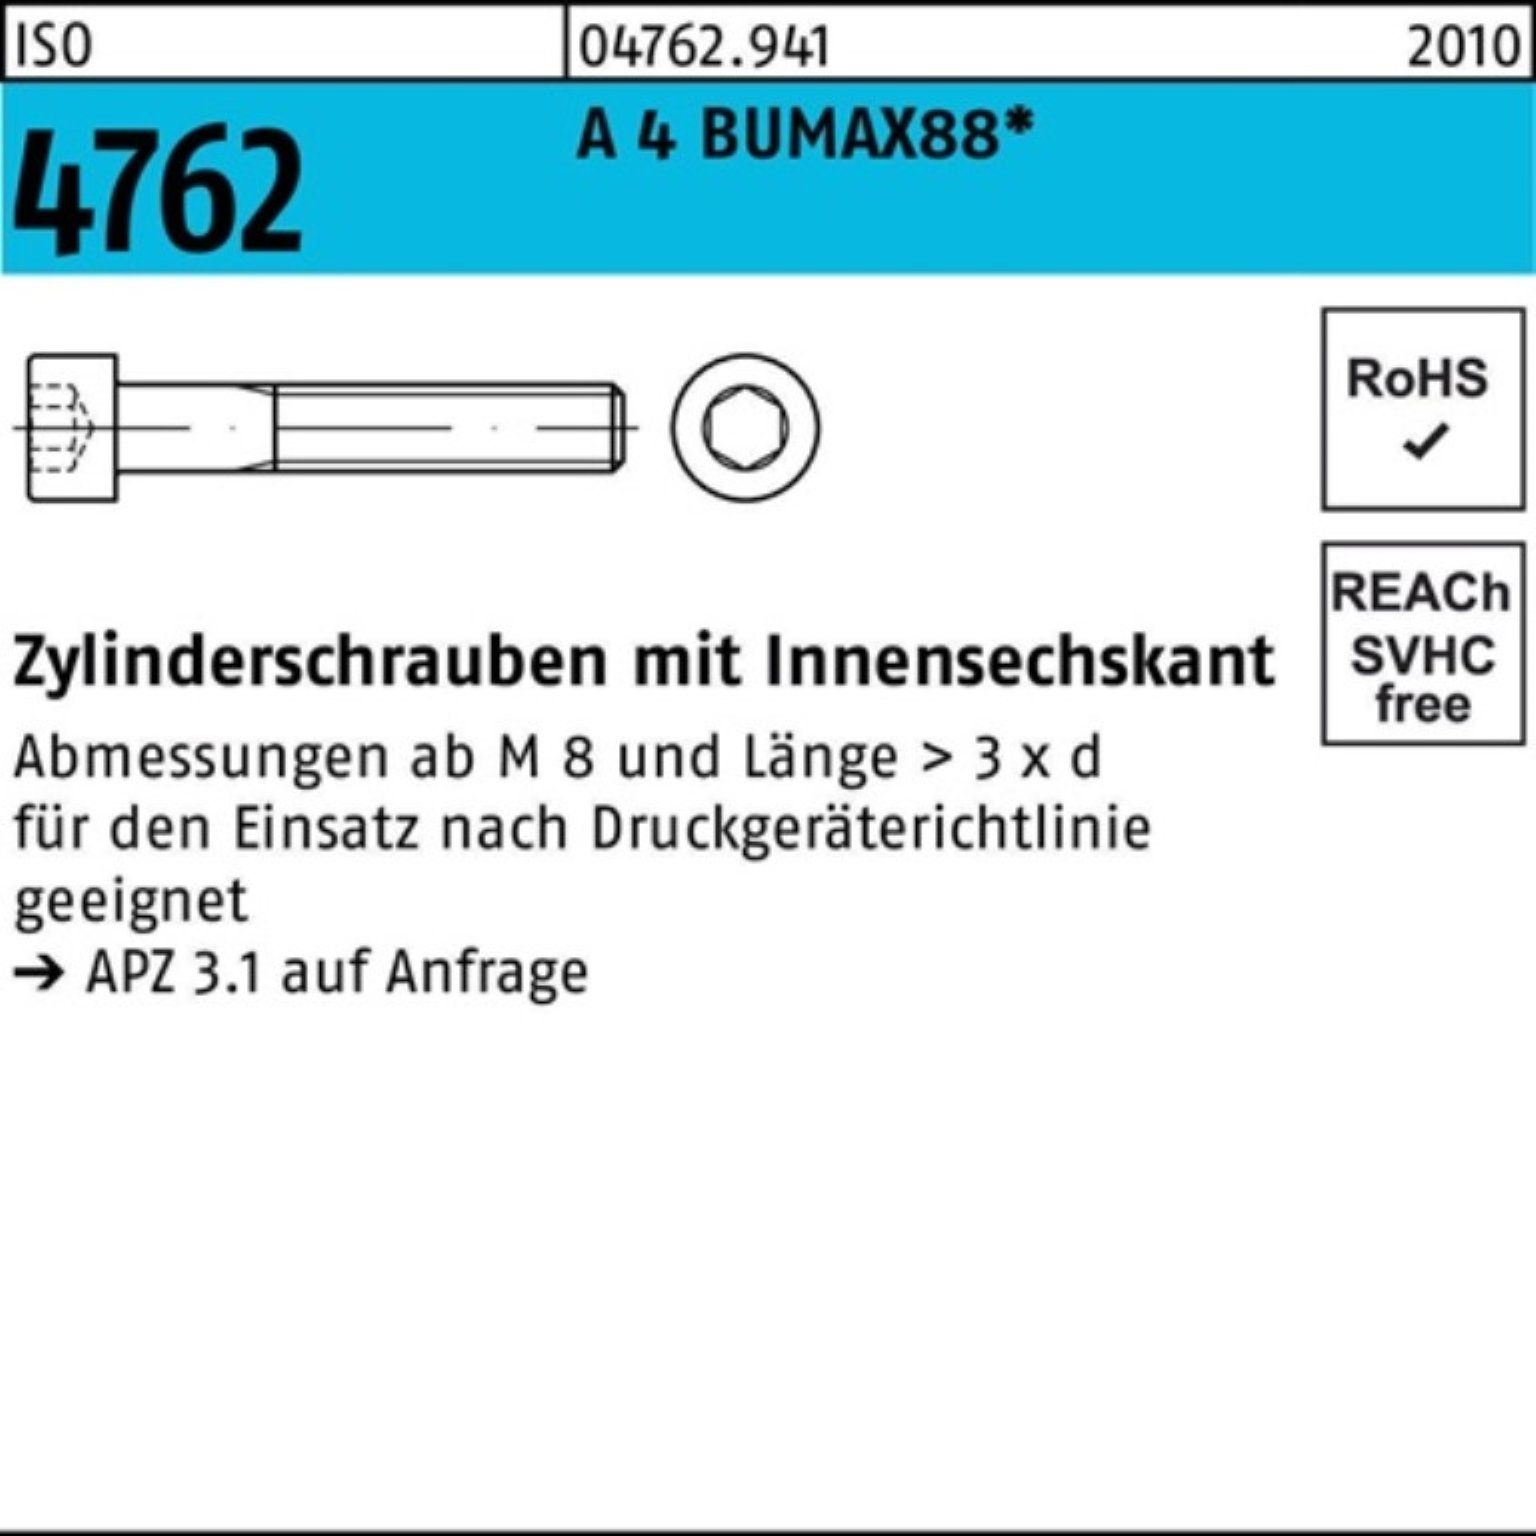 Bufab Zylinderschraube 100er Pack Zylinderschraube ISO 4762 Innen-6kt M5x 12 A 4 BUMAX88 100